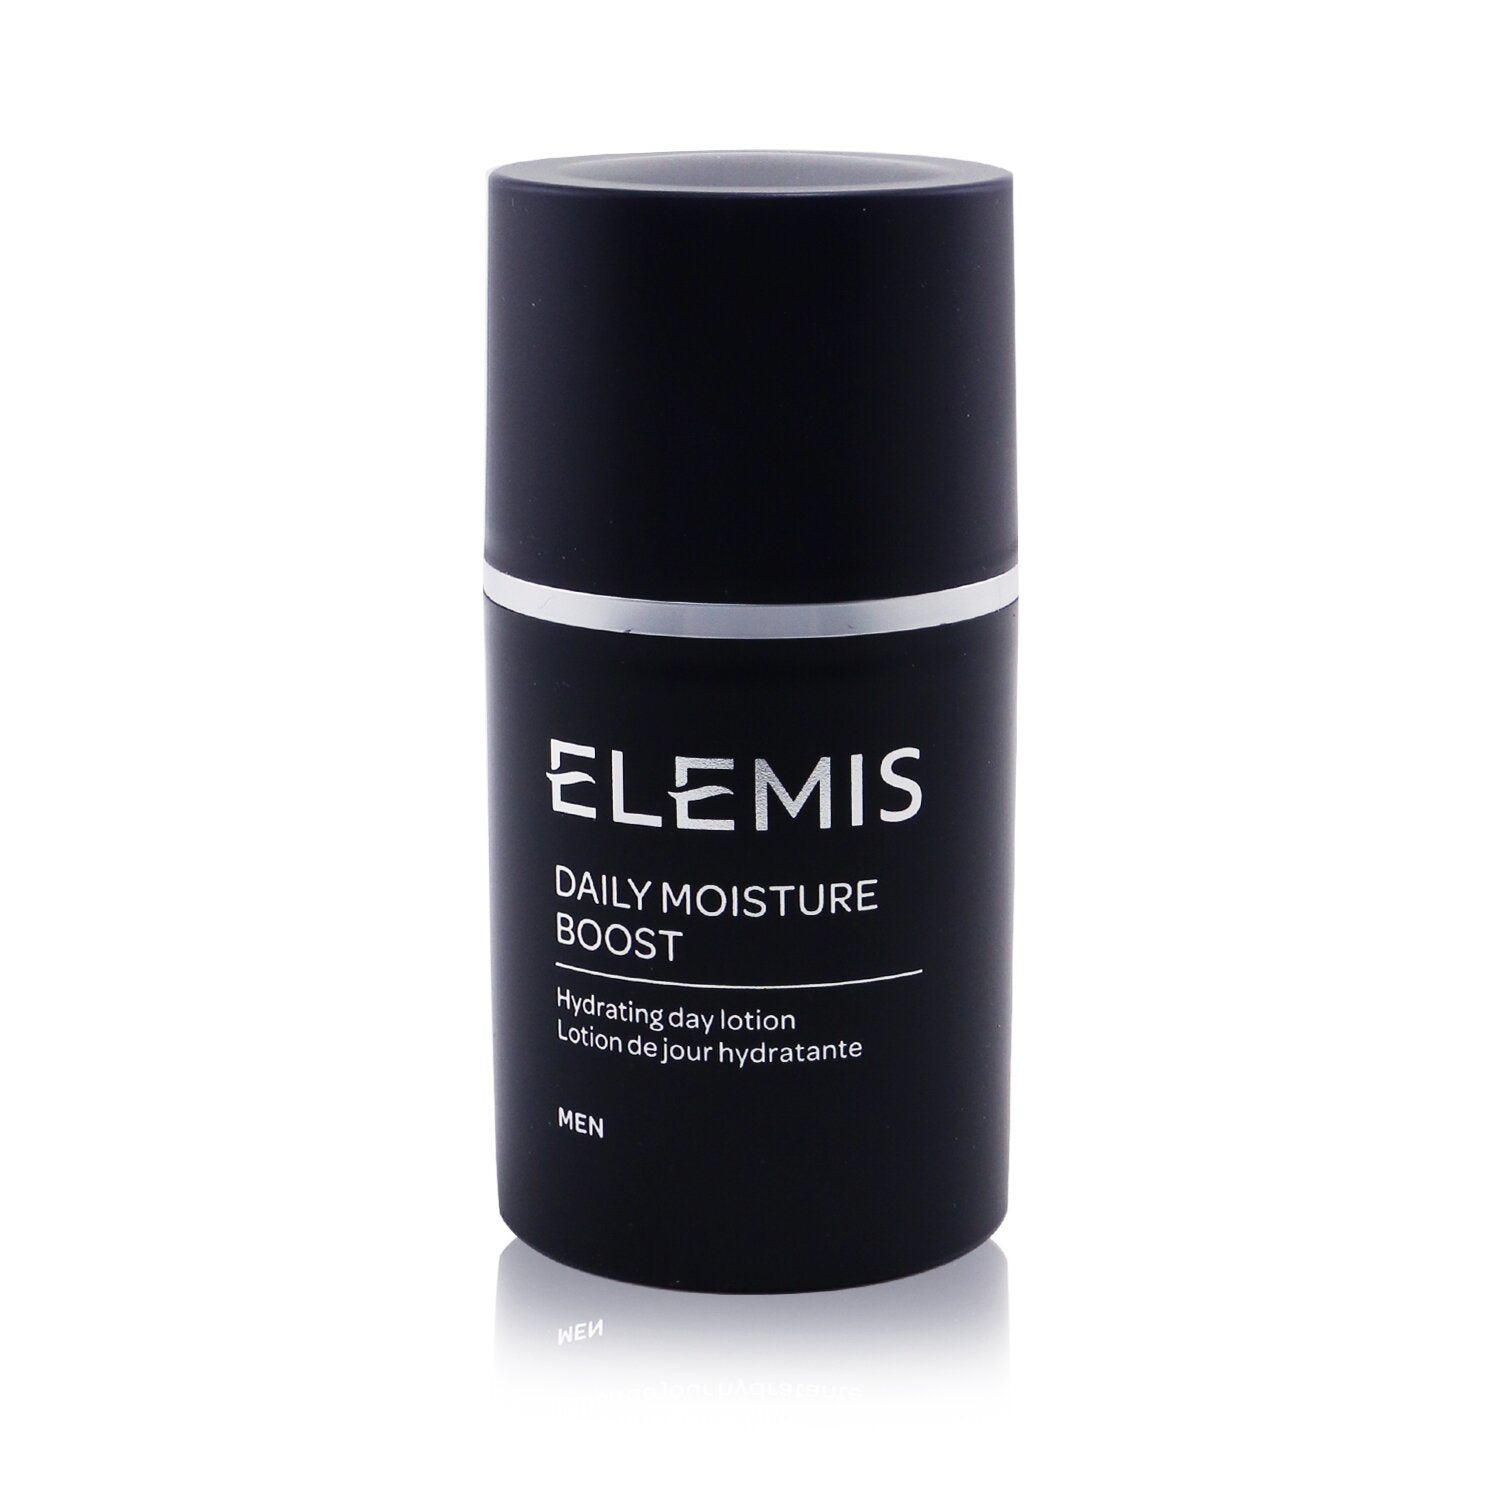 Elemis - Daily Moisture Boost - 50ml/1.7oz is a lightweight moisturizer for men's skin.